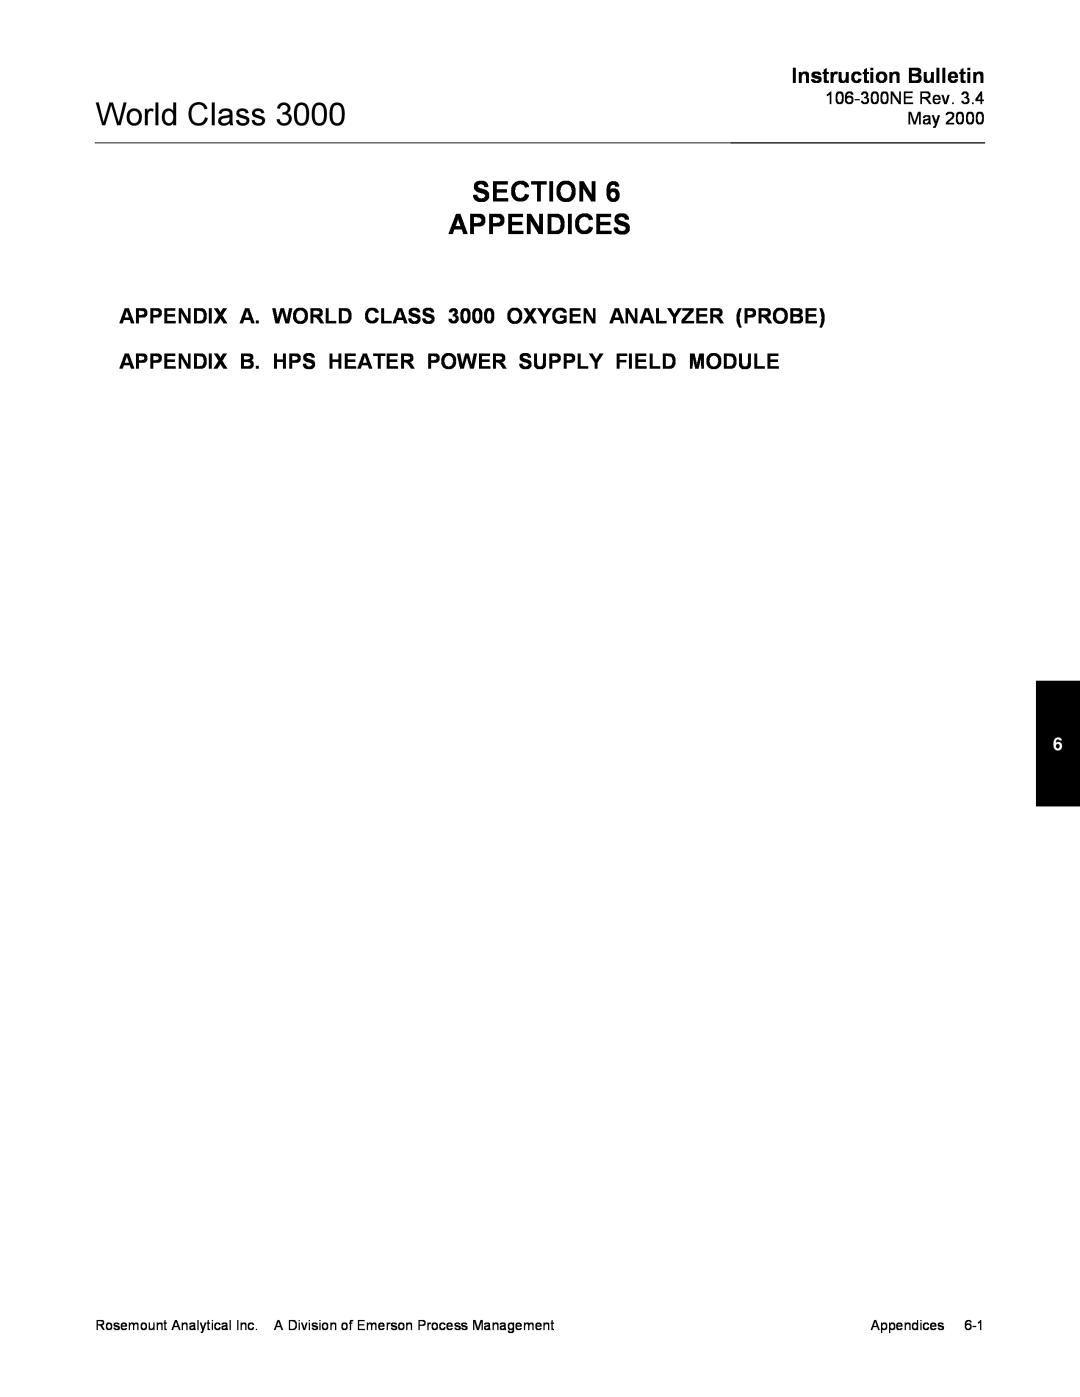 Emerson 3000 manual Section Appendices, Instruction Bulletin, Appendix B. Hps Heater Power Supply Field Module 